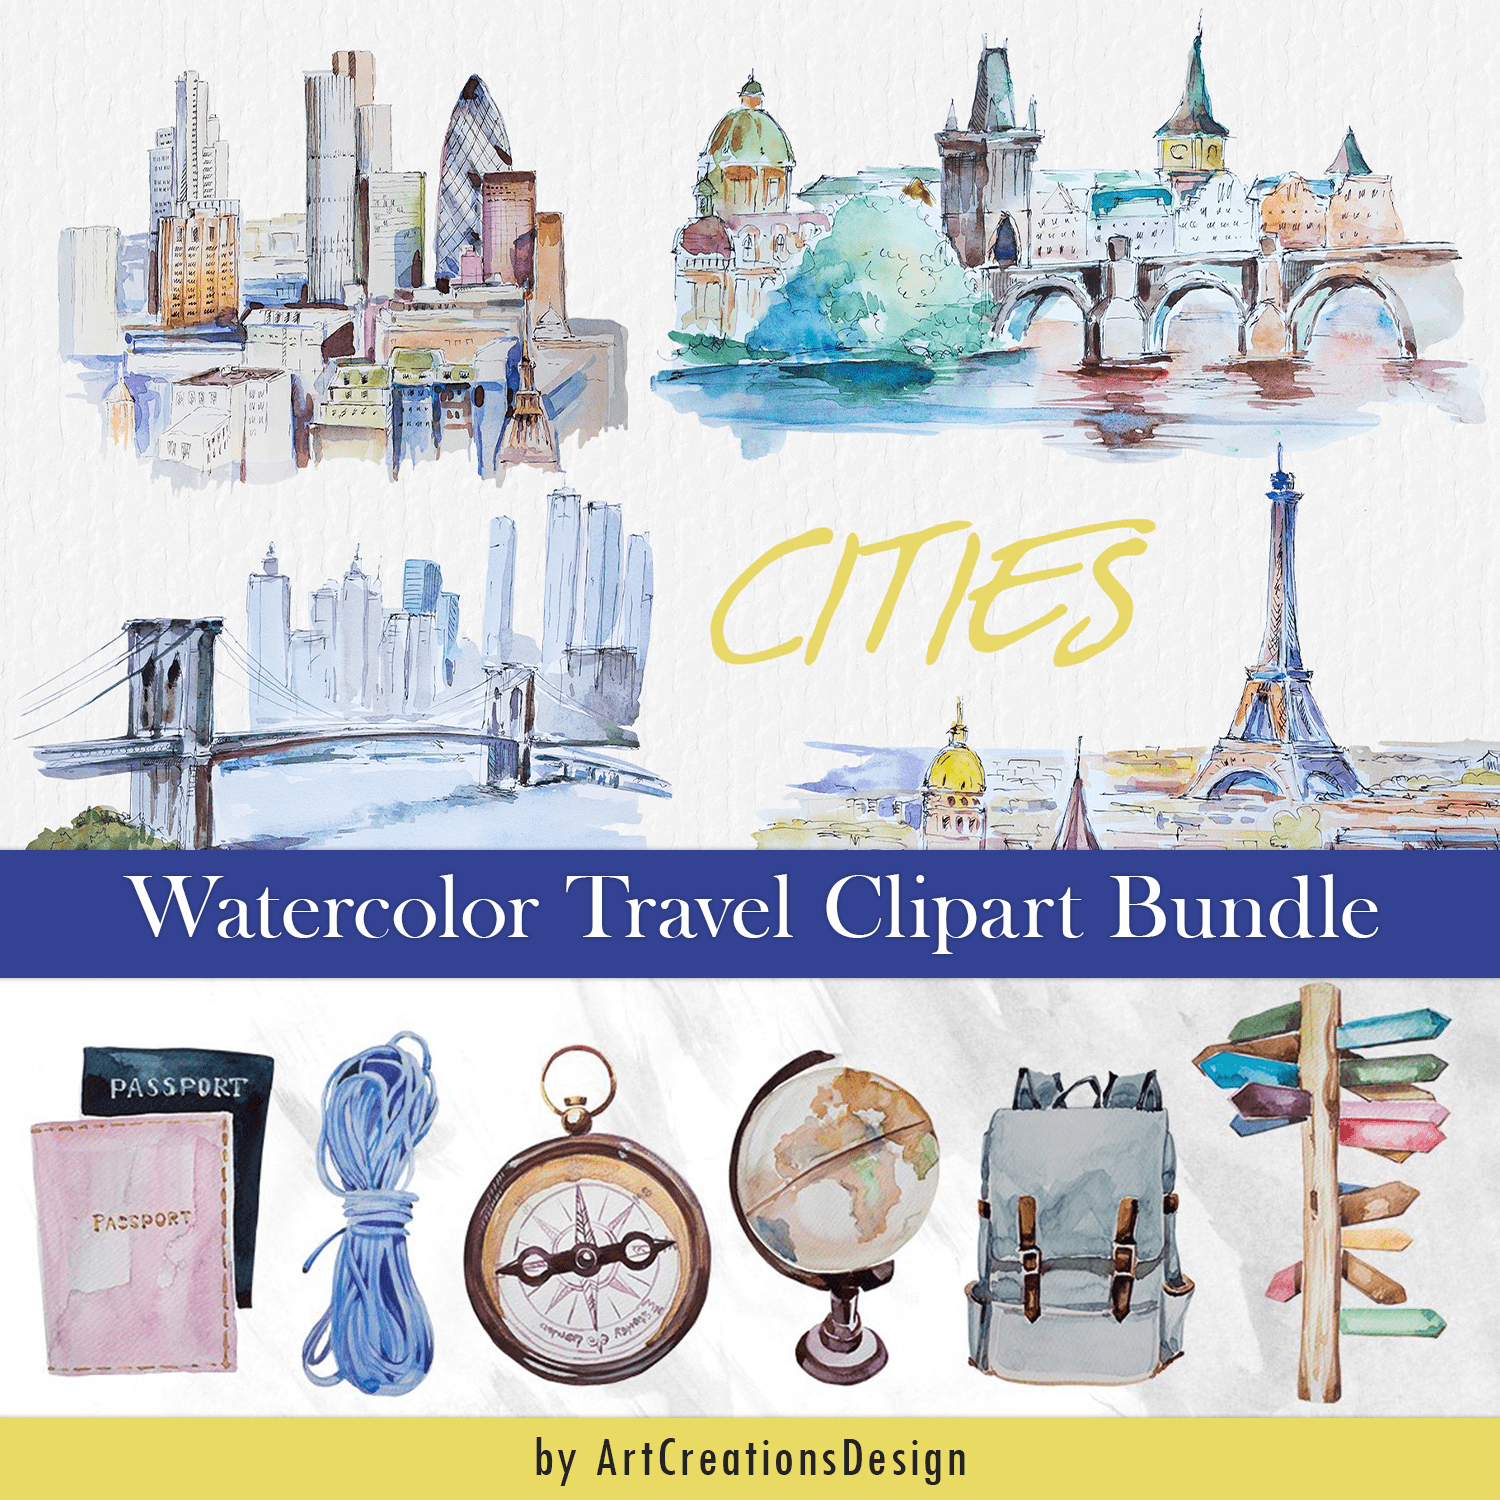 Watercolor Travel Clipart Bundle cover.